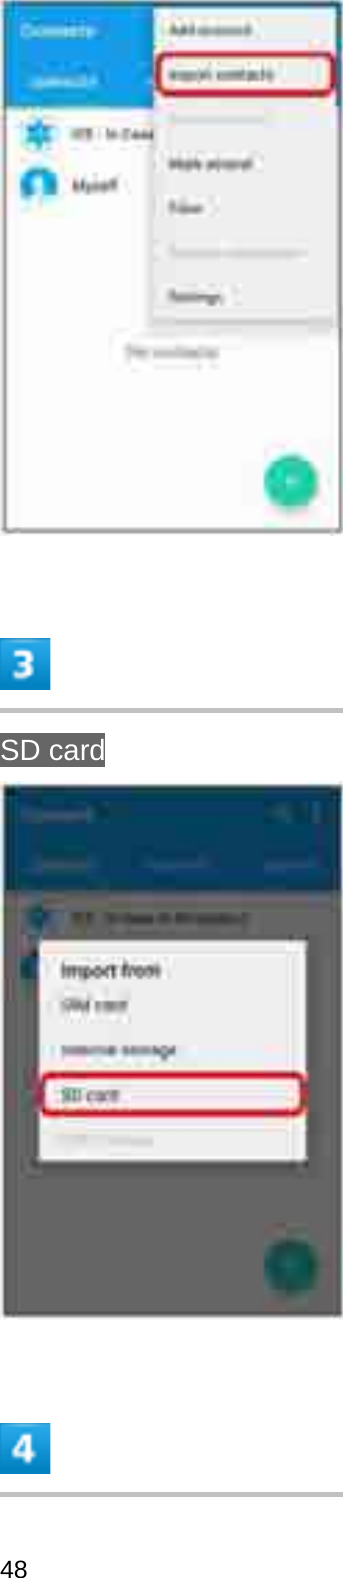 SD card48